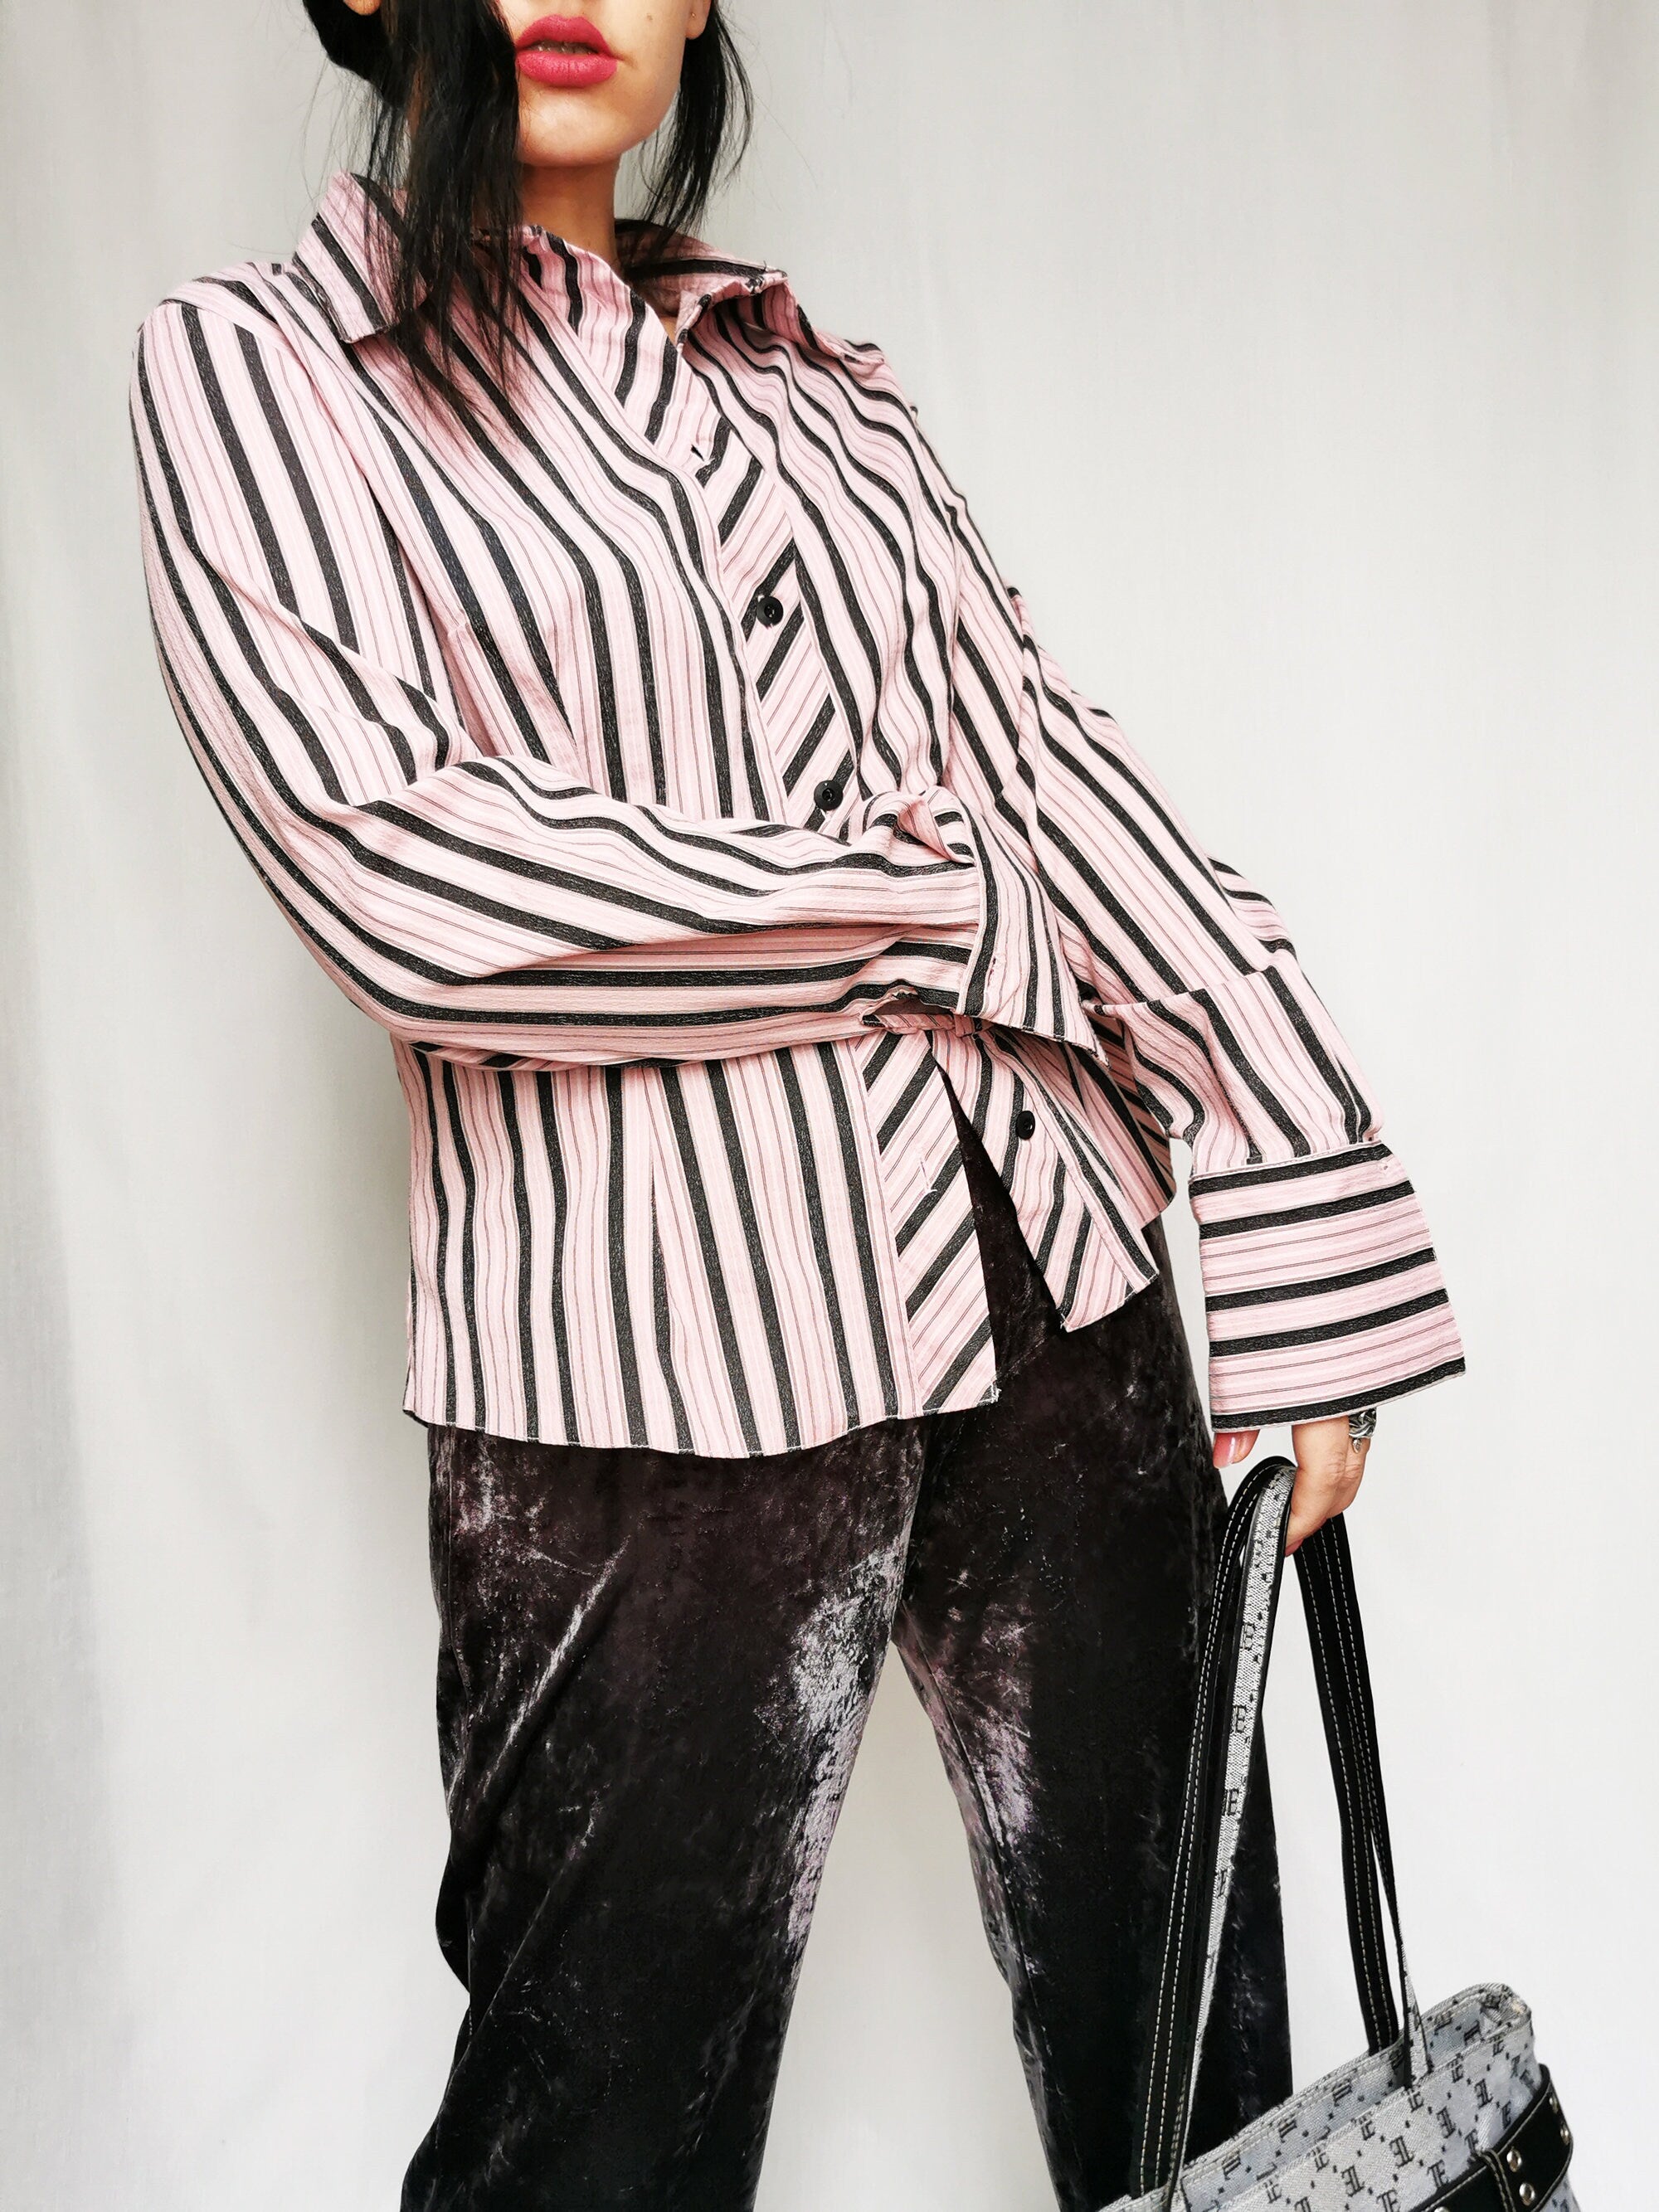 Vintage 90s pink striped formal smart woman shirt